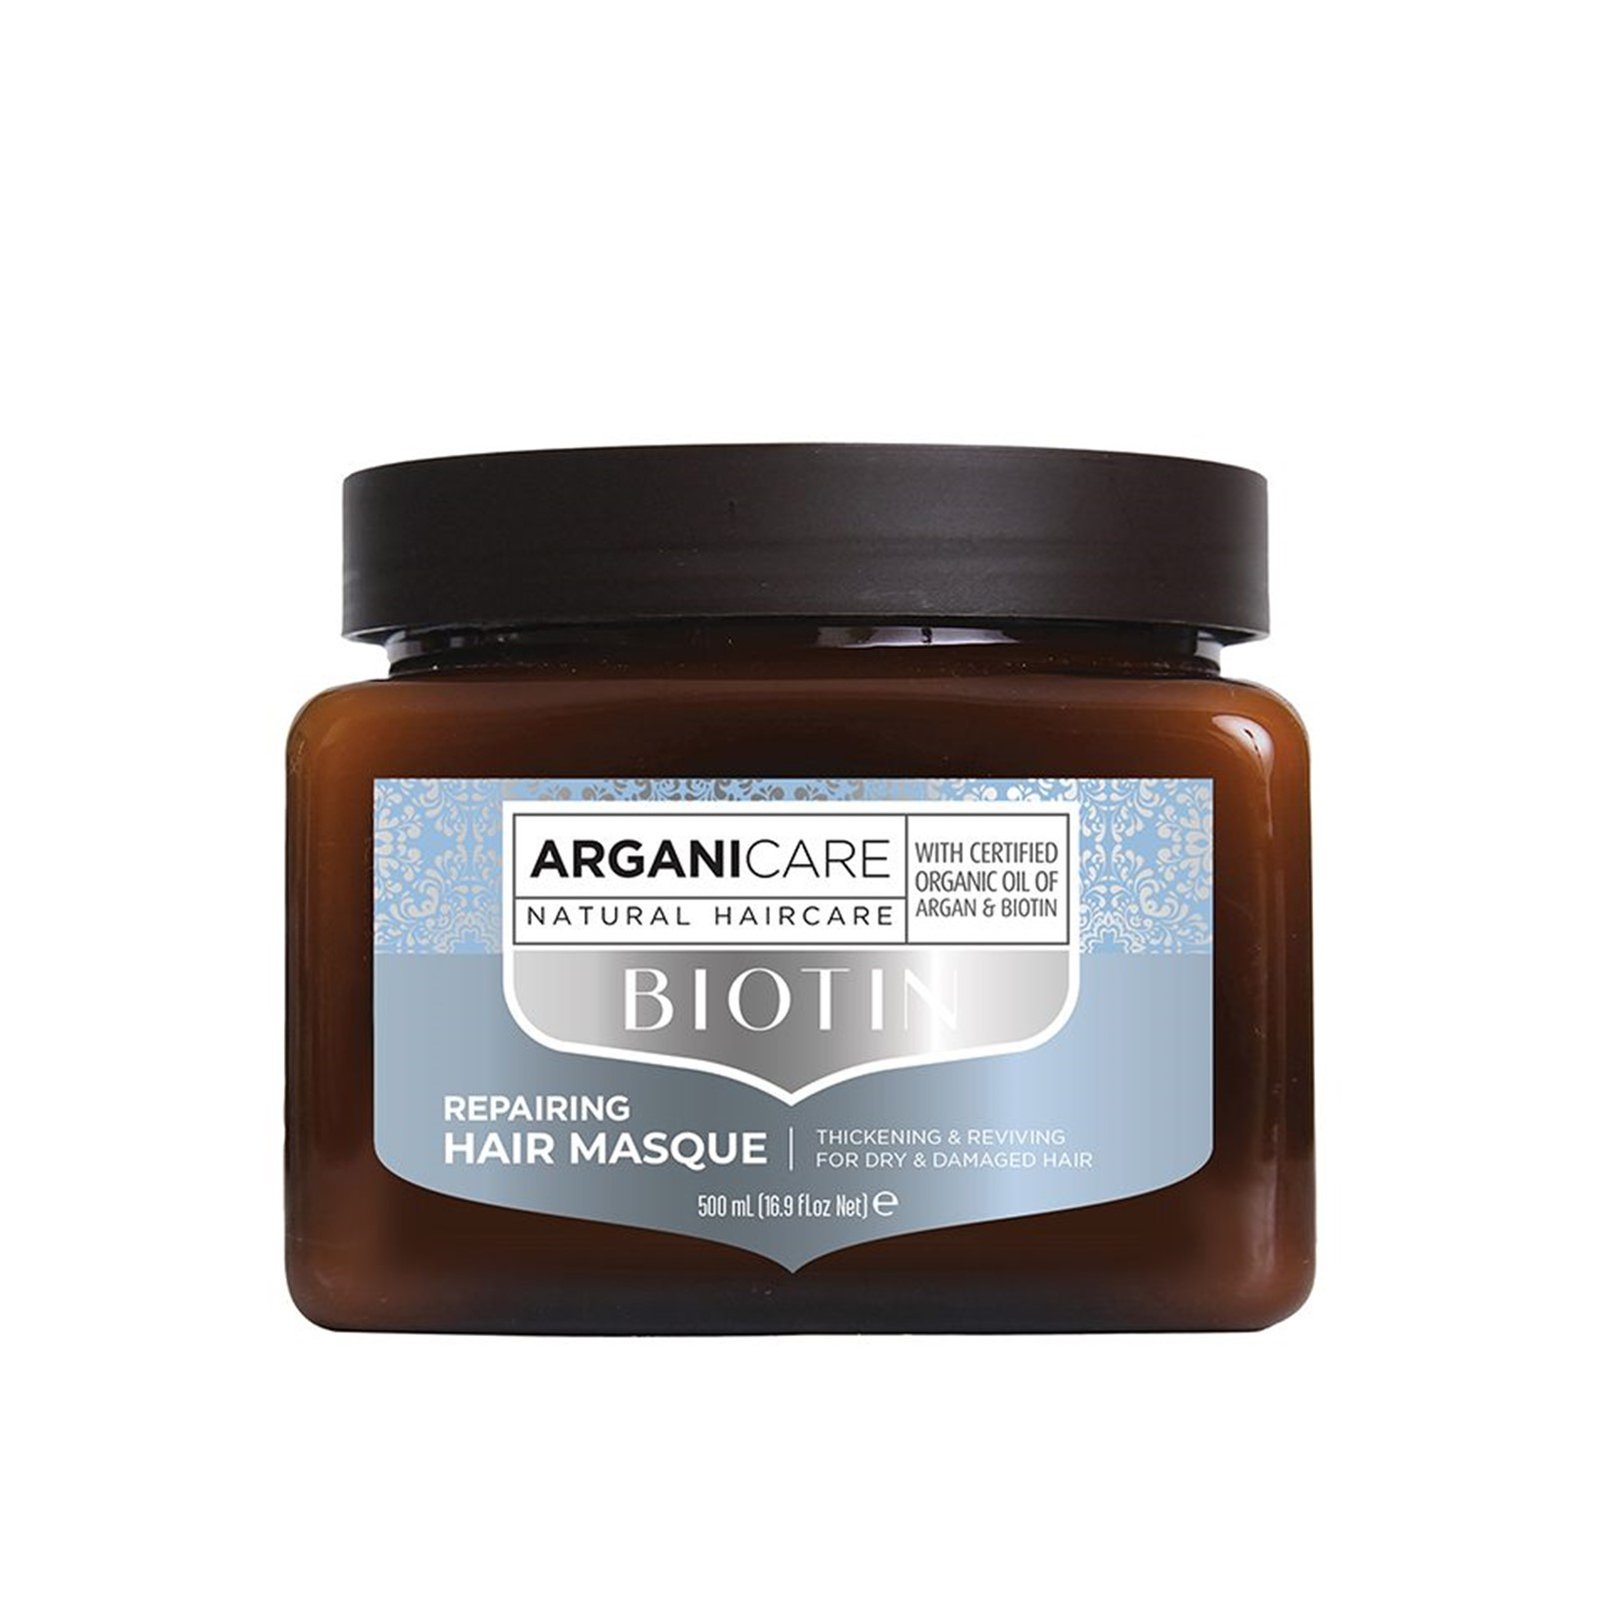 Arganicare Biotin Repairing Hair Masque 500ml